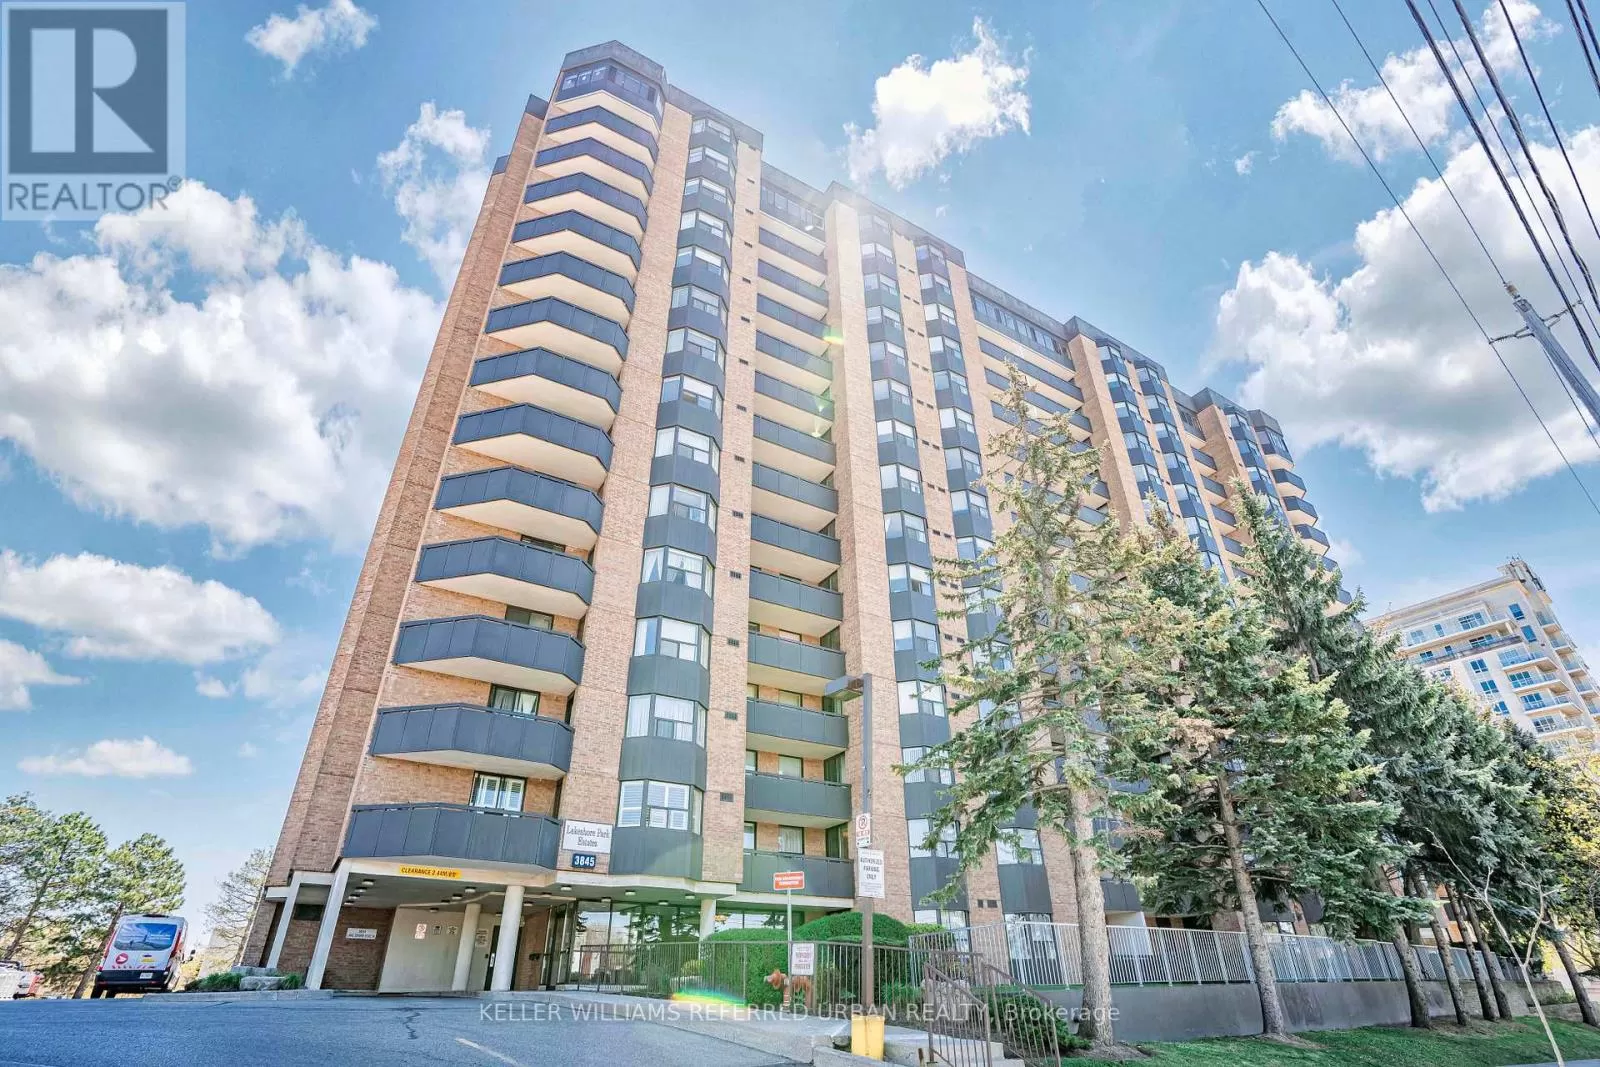 Apartment for rent: 1411 - 3845 Lake Shore Boulevard, Toronto, Ontario M8W 4Y3